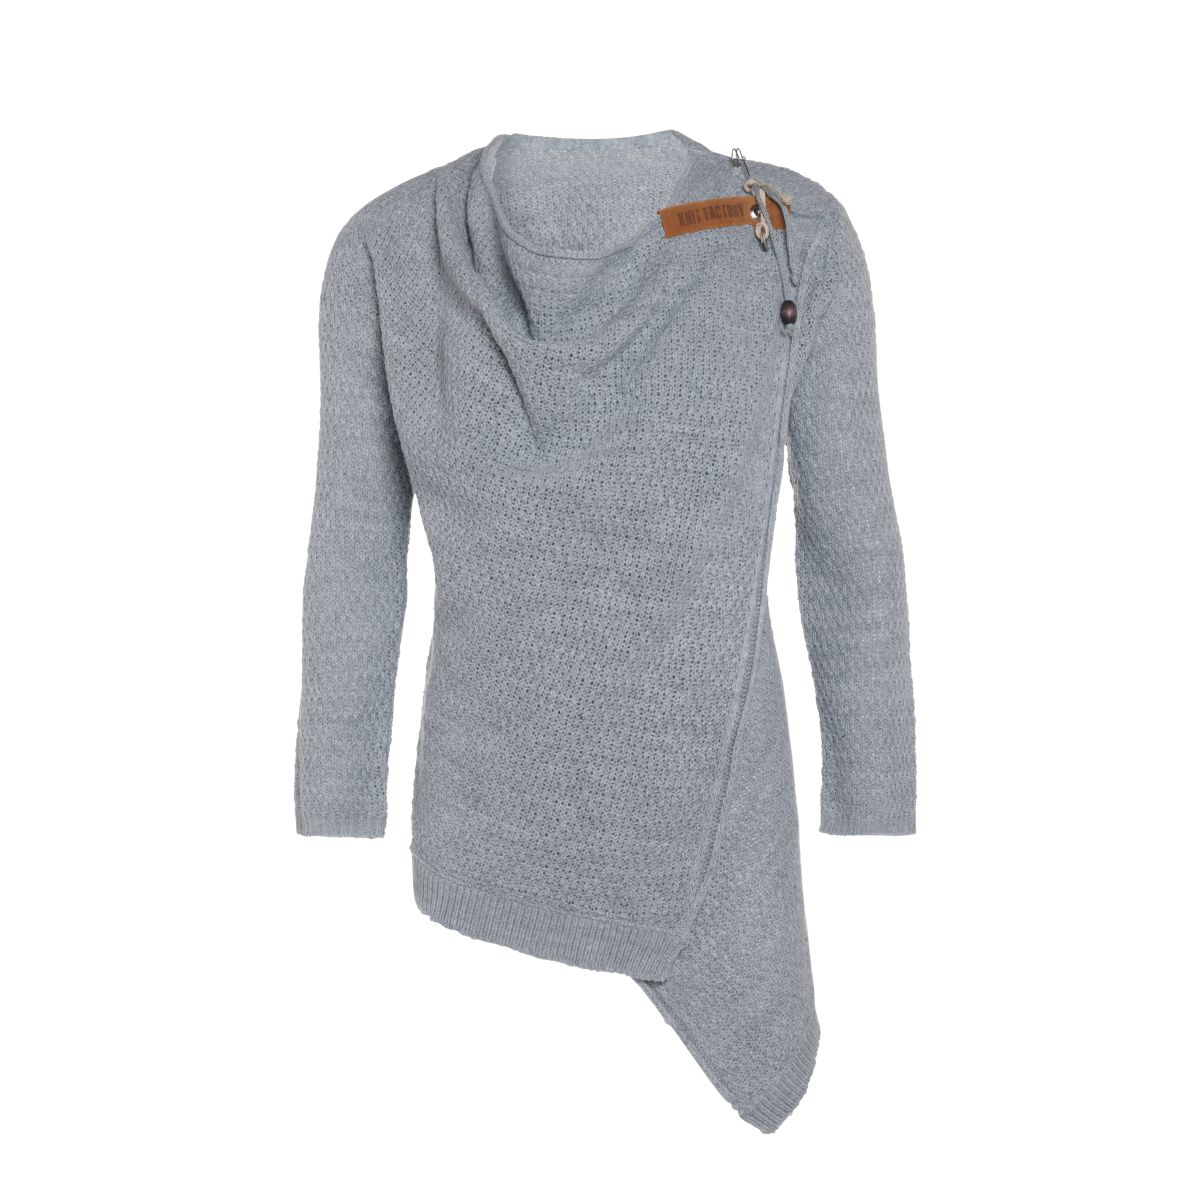 emy knitted cardigan light grey 3638